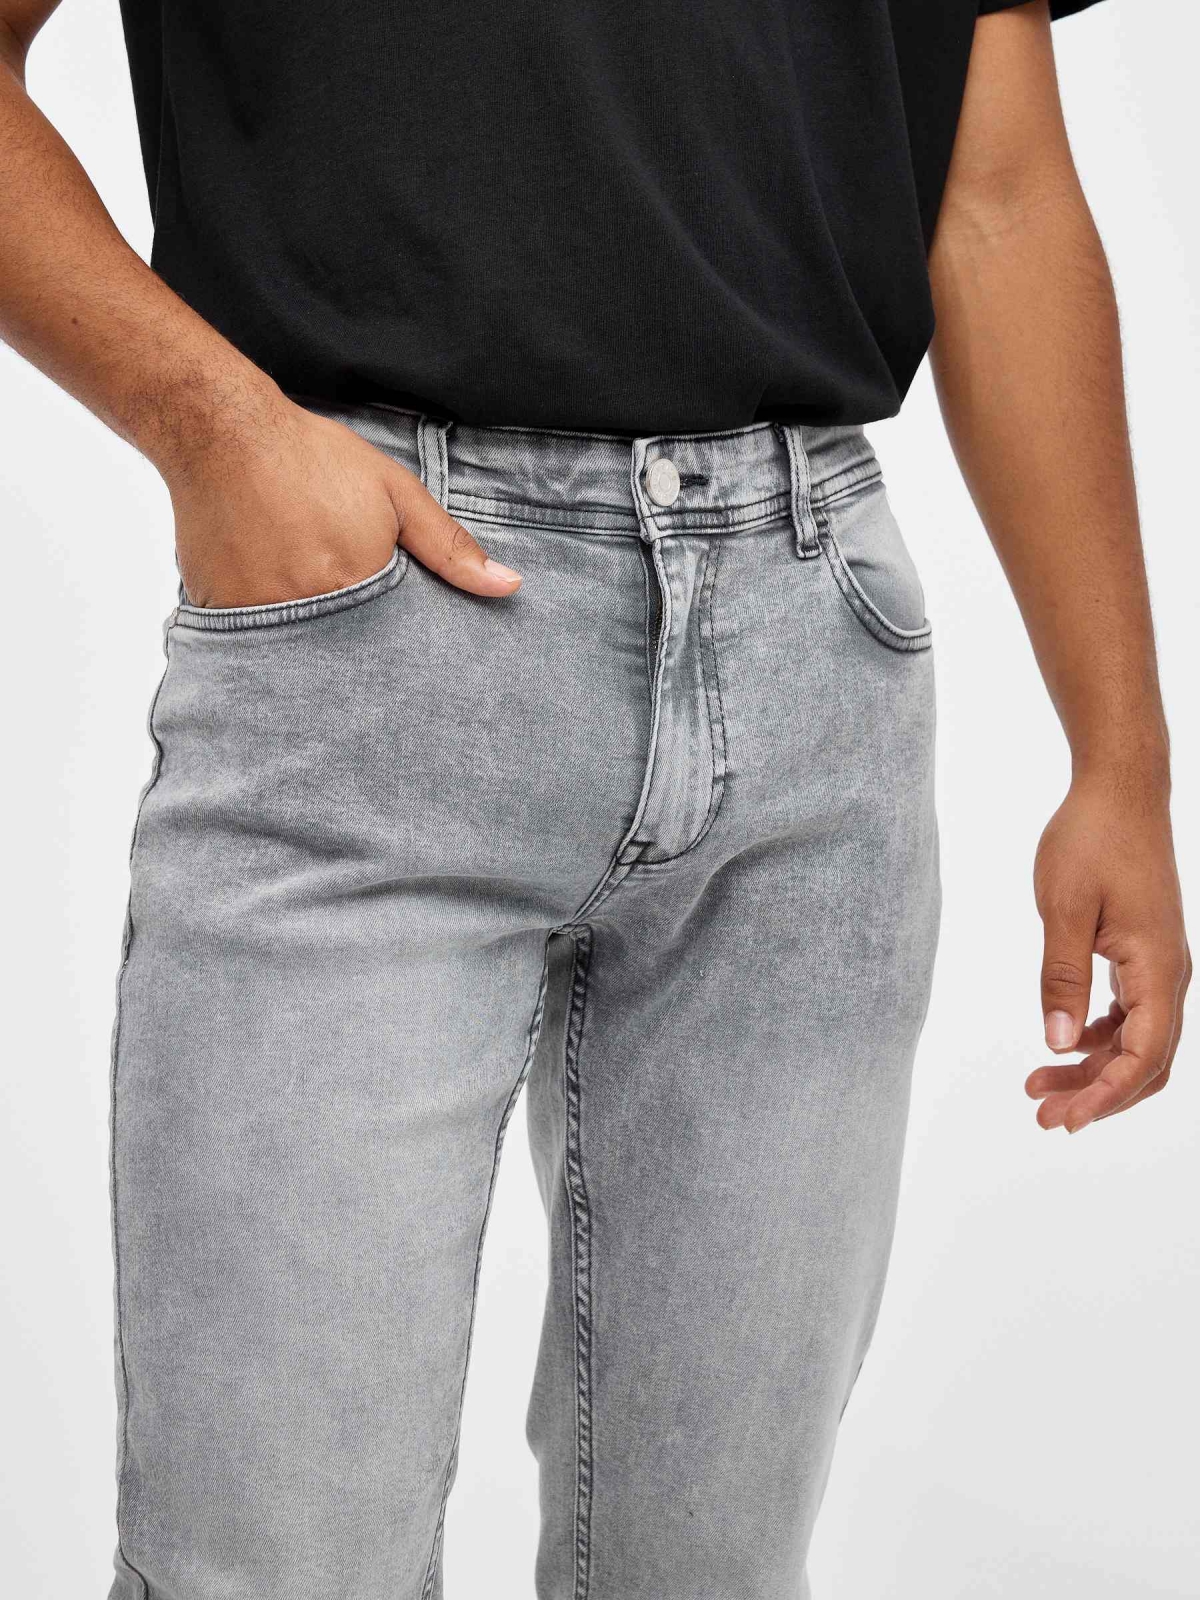 Jeans regular denim gris gris vista detalle